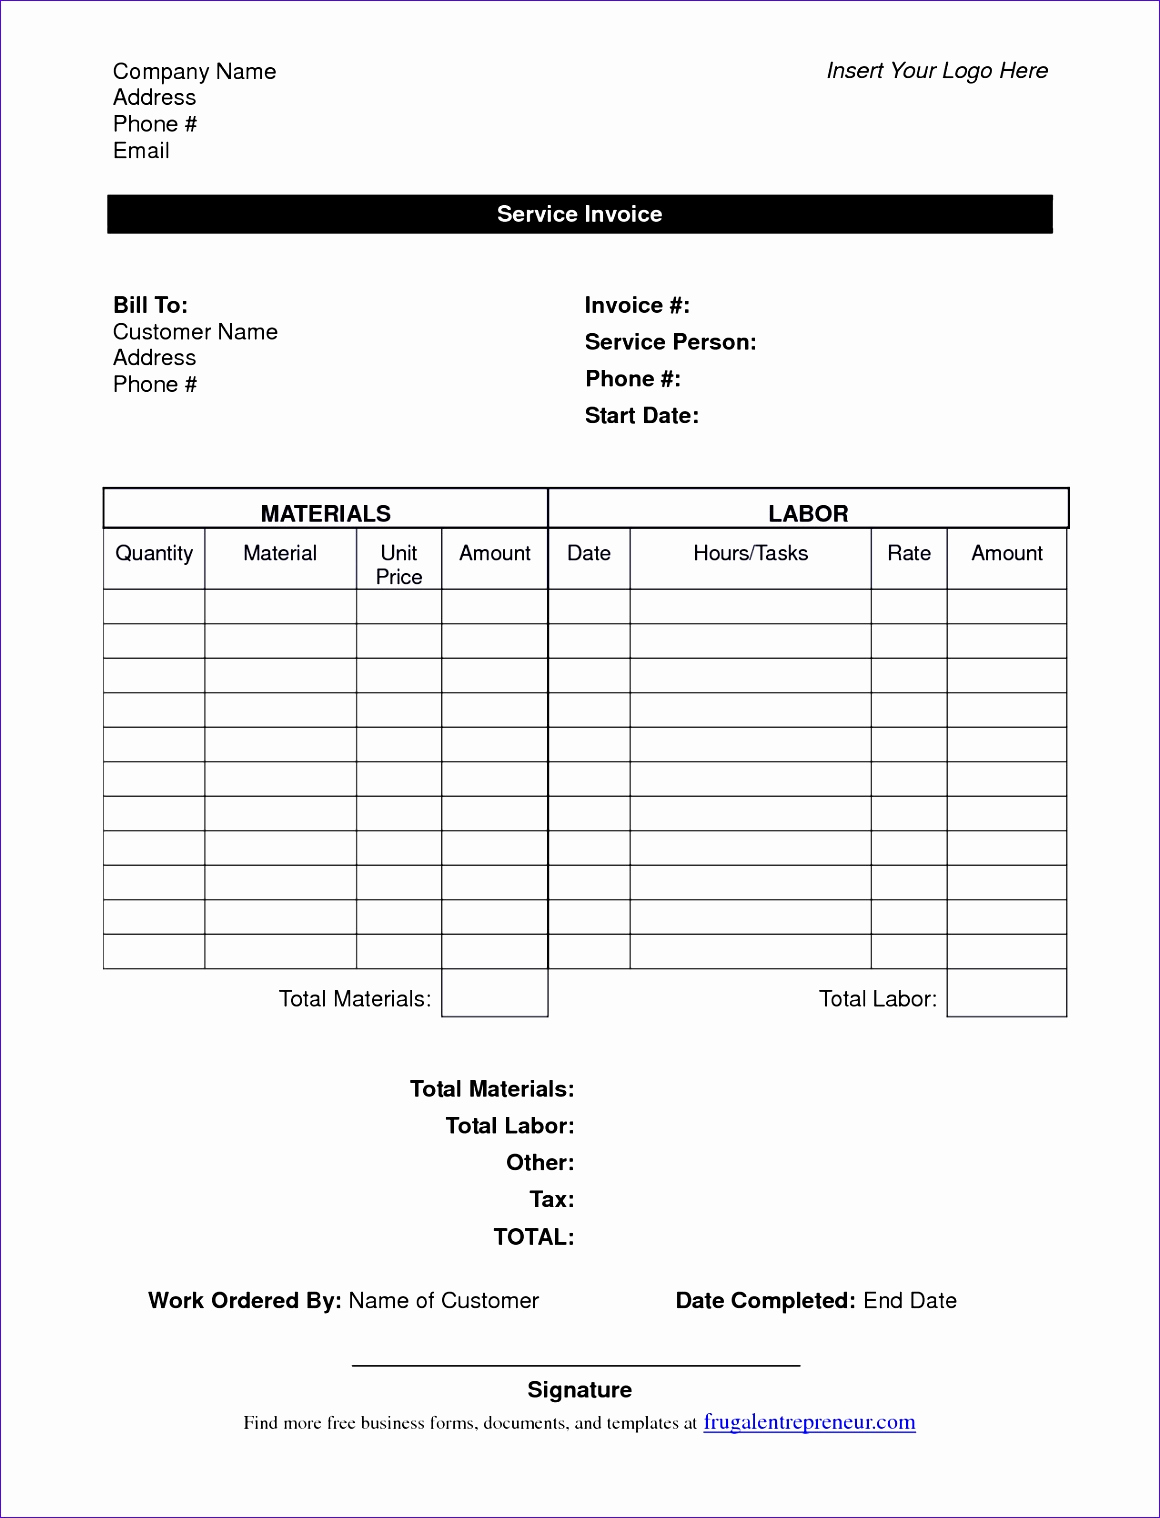 Labor Invoice Template Excel Beautiful 7 Service Invoice Template Excel Exceltemplates